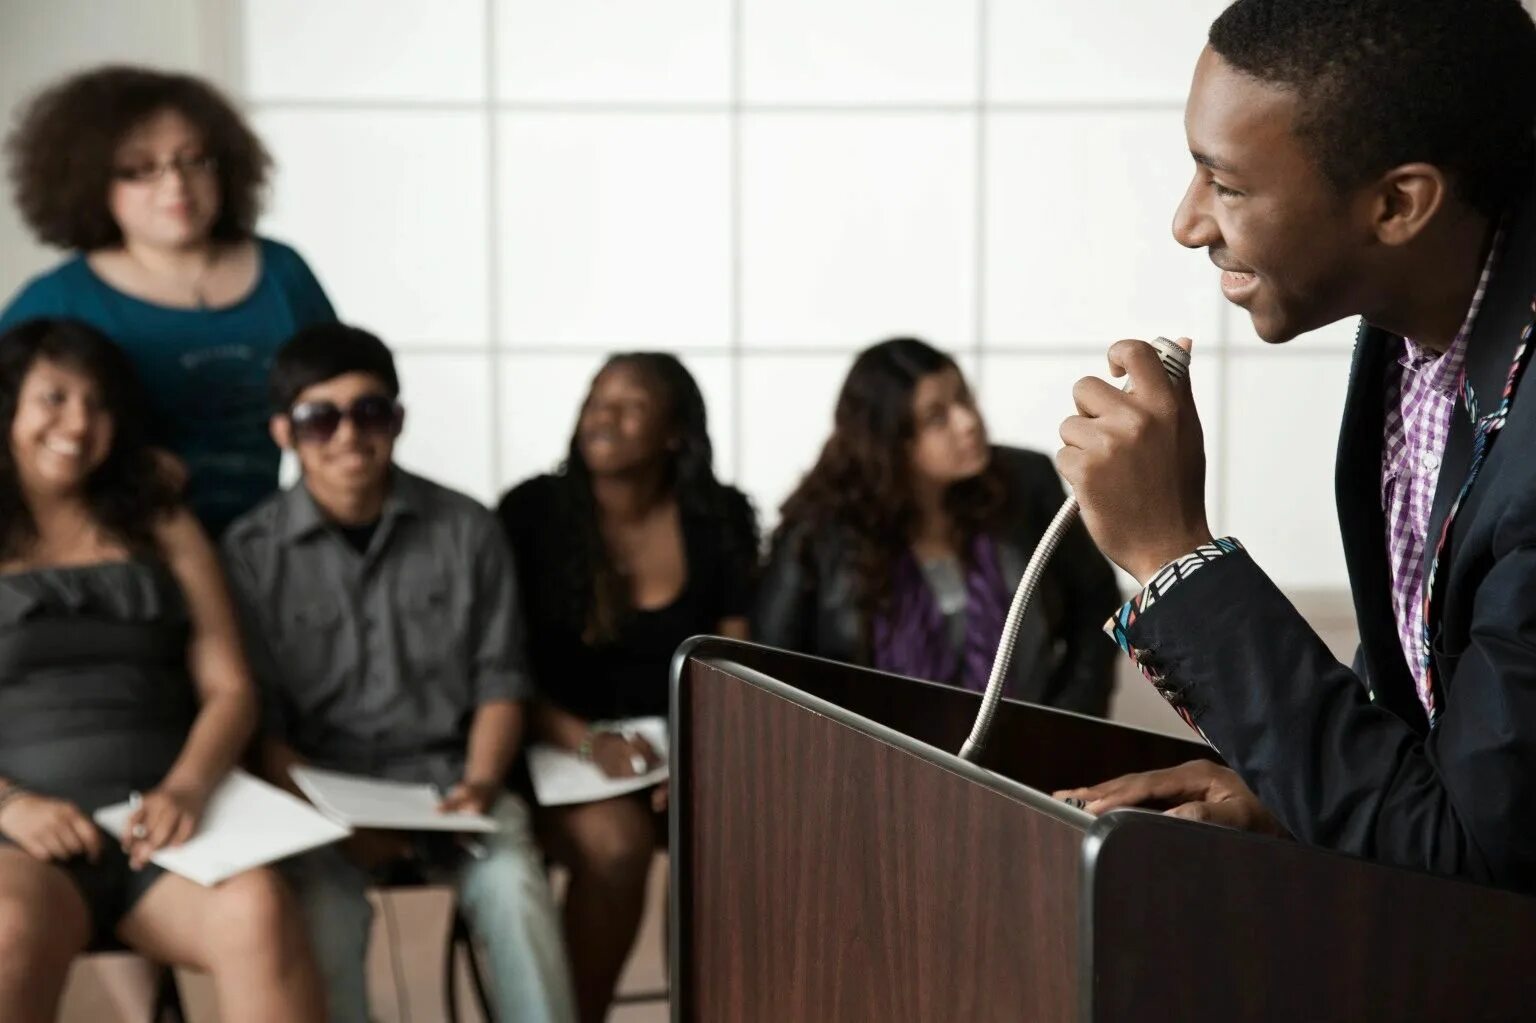 Speaking Club люди. Students debates. Картинка дебаты студентов. Speaking фото.